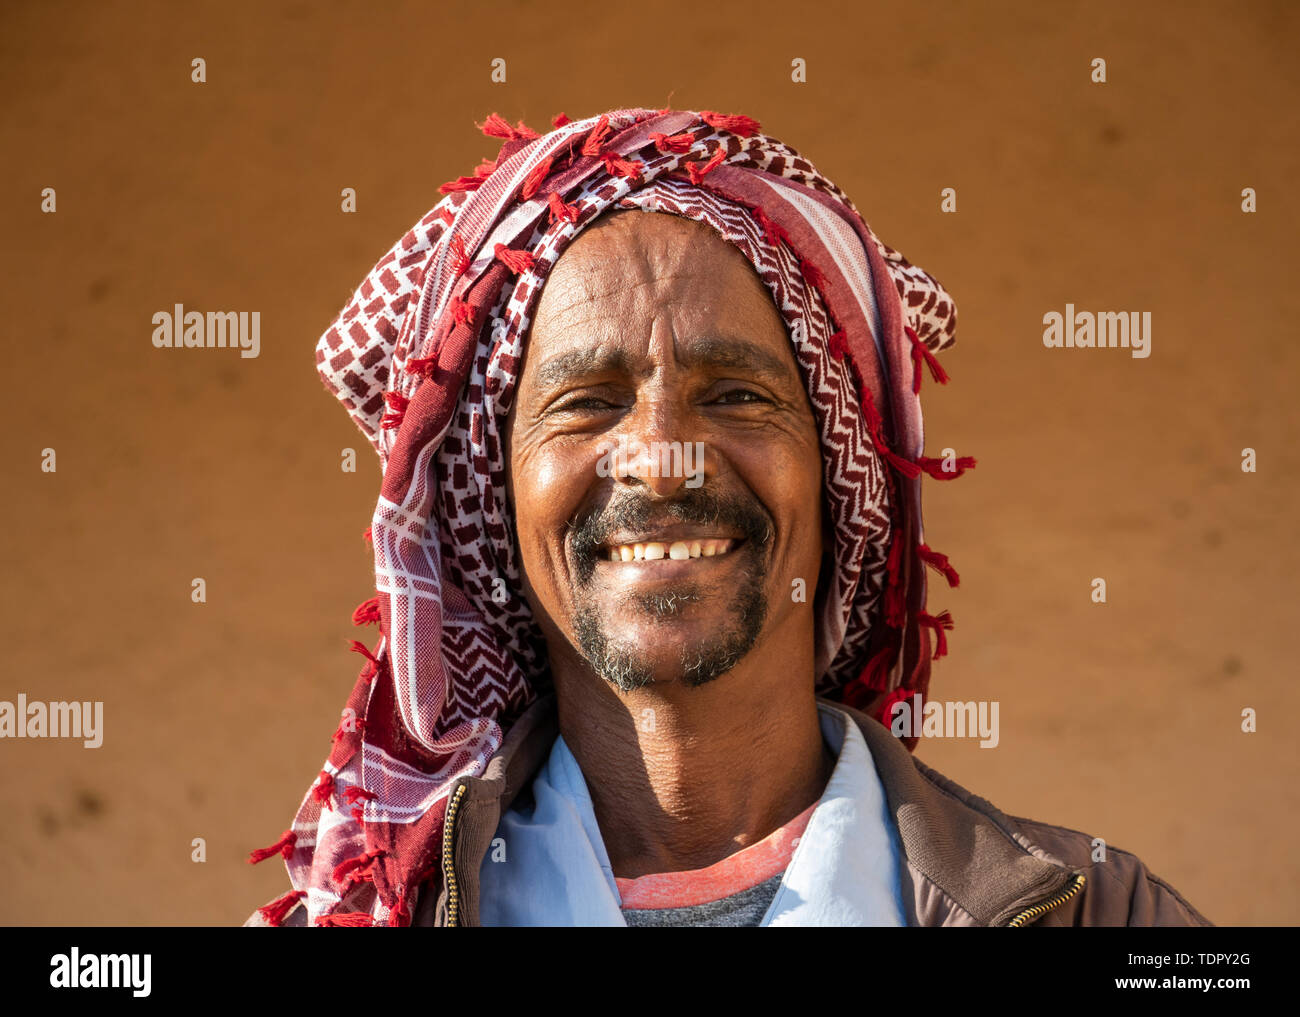 Portrait of an Eritrean man smiling with a headscarf on his head, Monday livestock market; Keren, Anseba Region, Eritrea Stock Photo